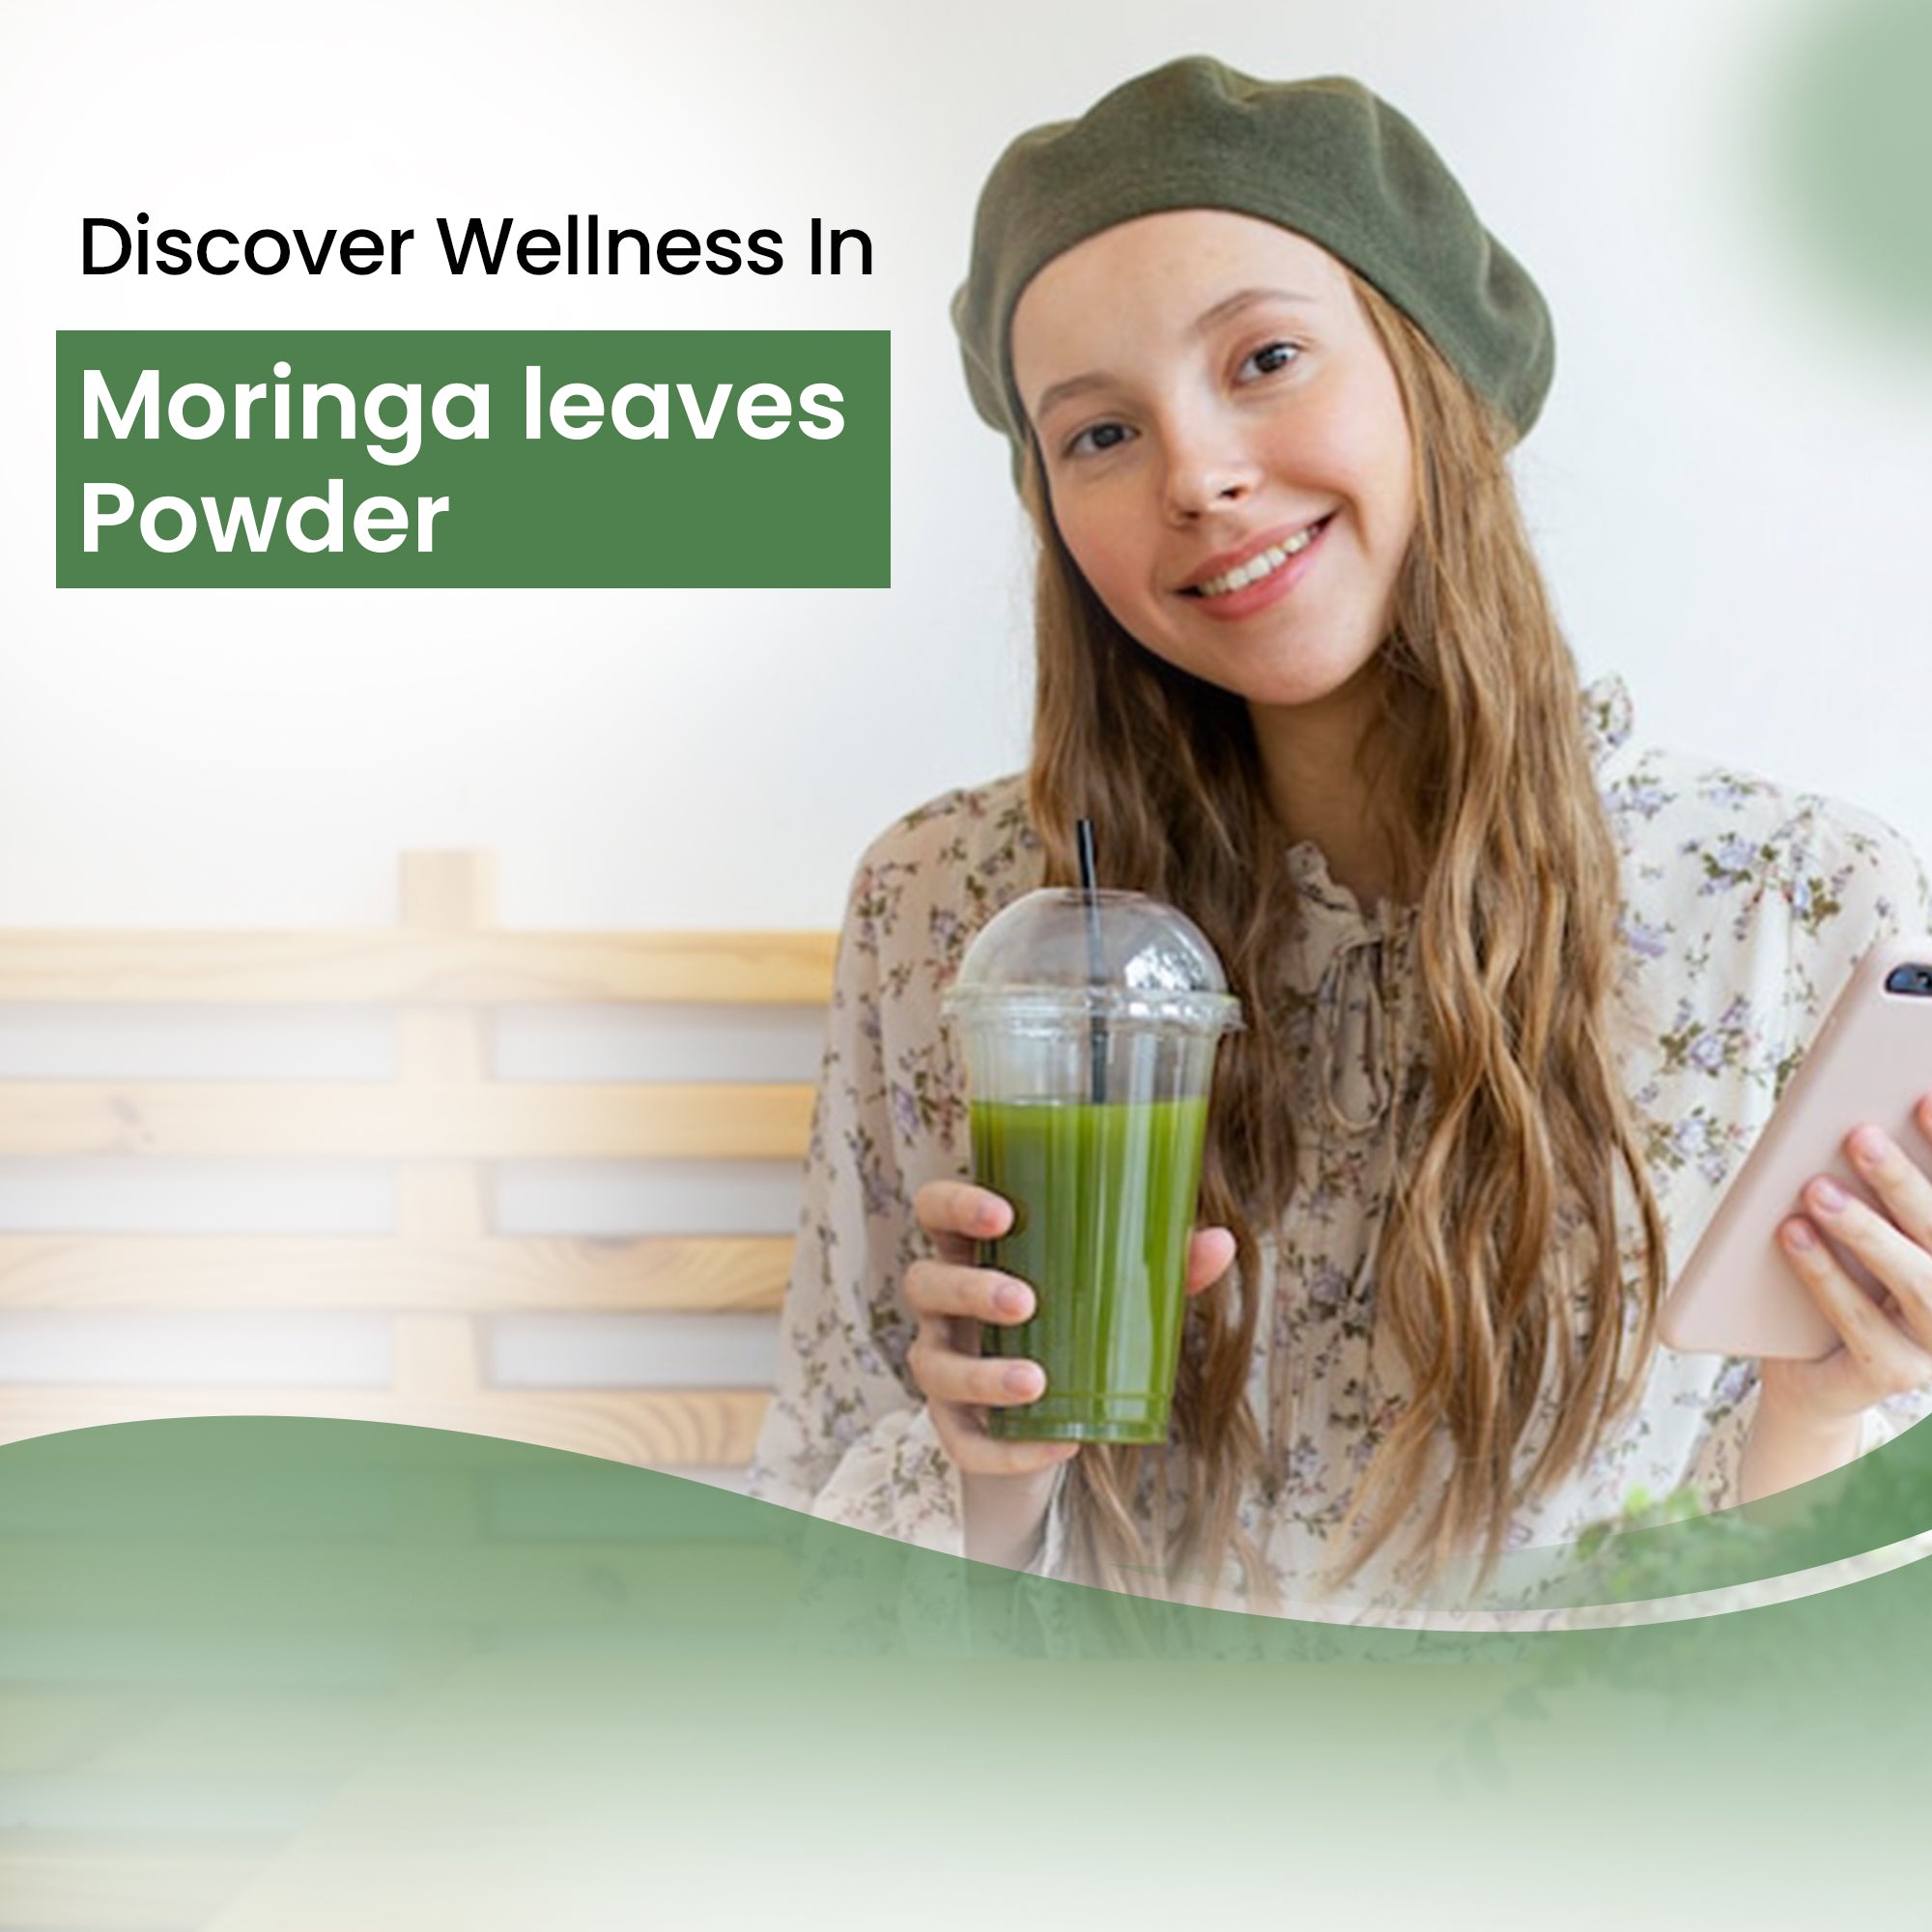 Organic Moringa Leaves Powder